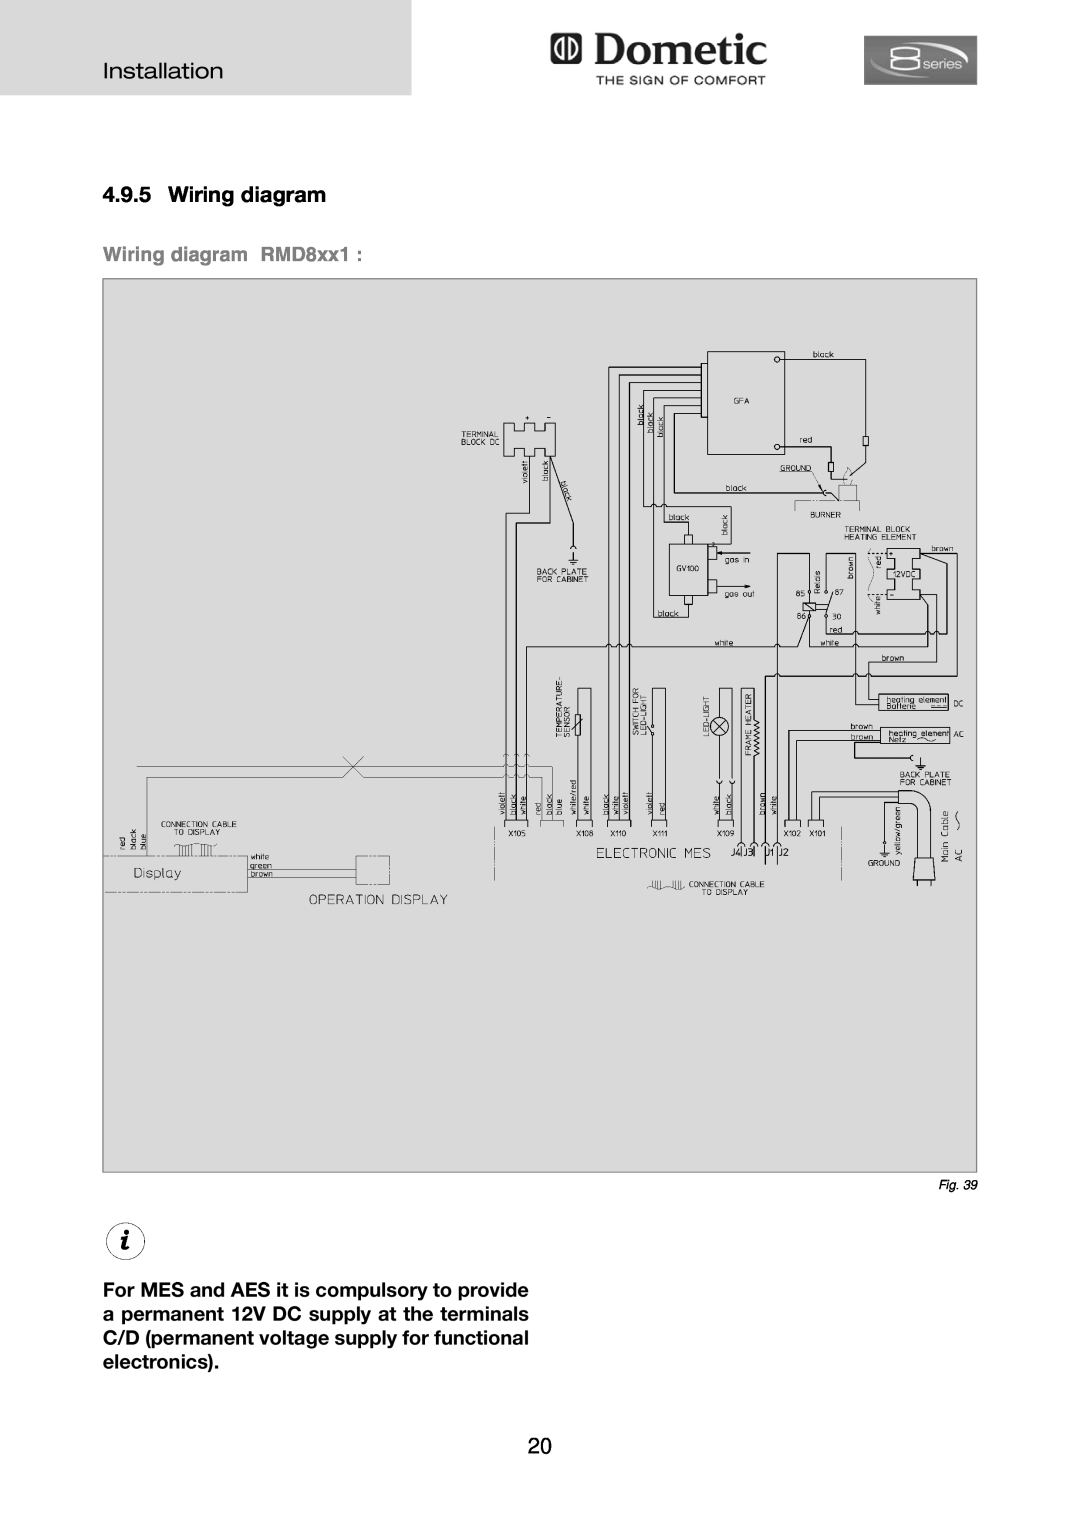 Dometic RMD 8505, RMD 8501, RMD 8551, RMD 8555 installation instructions Wiring diagram RMD8xx1, Installation 